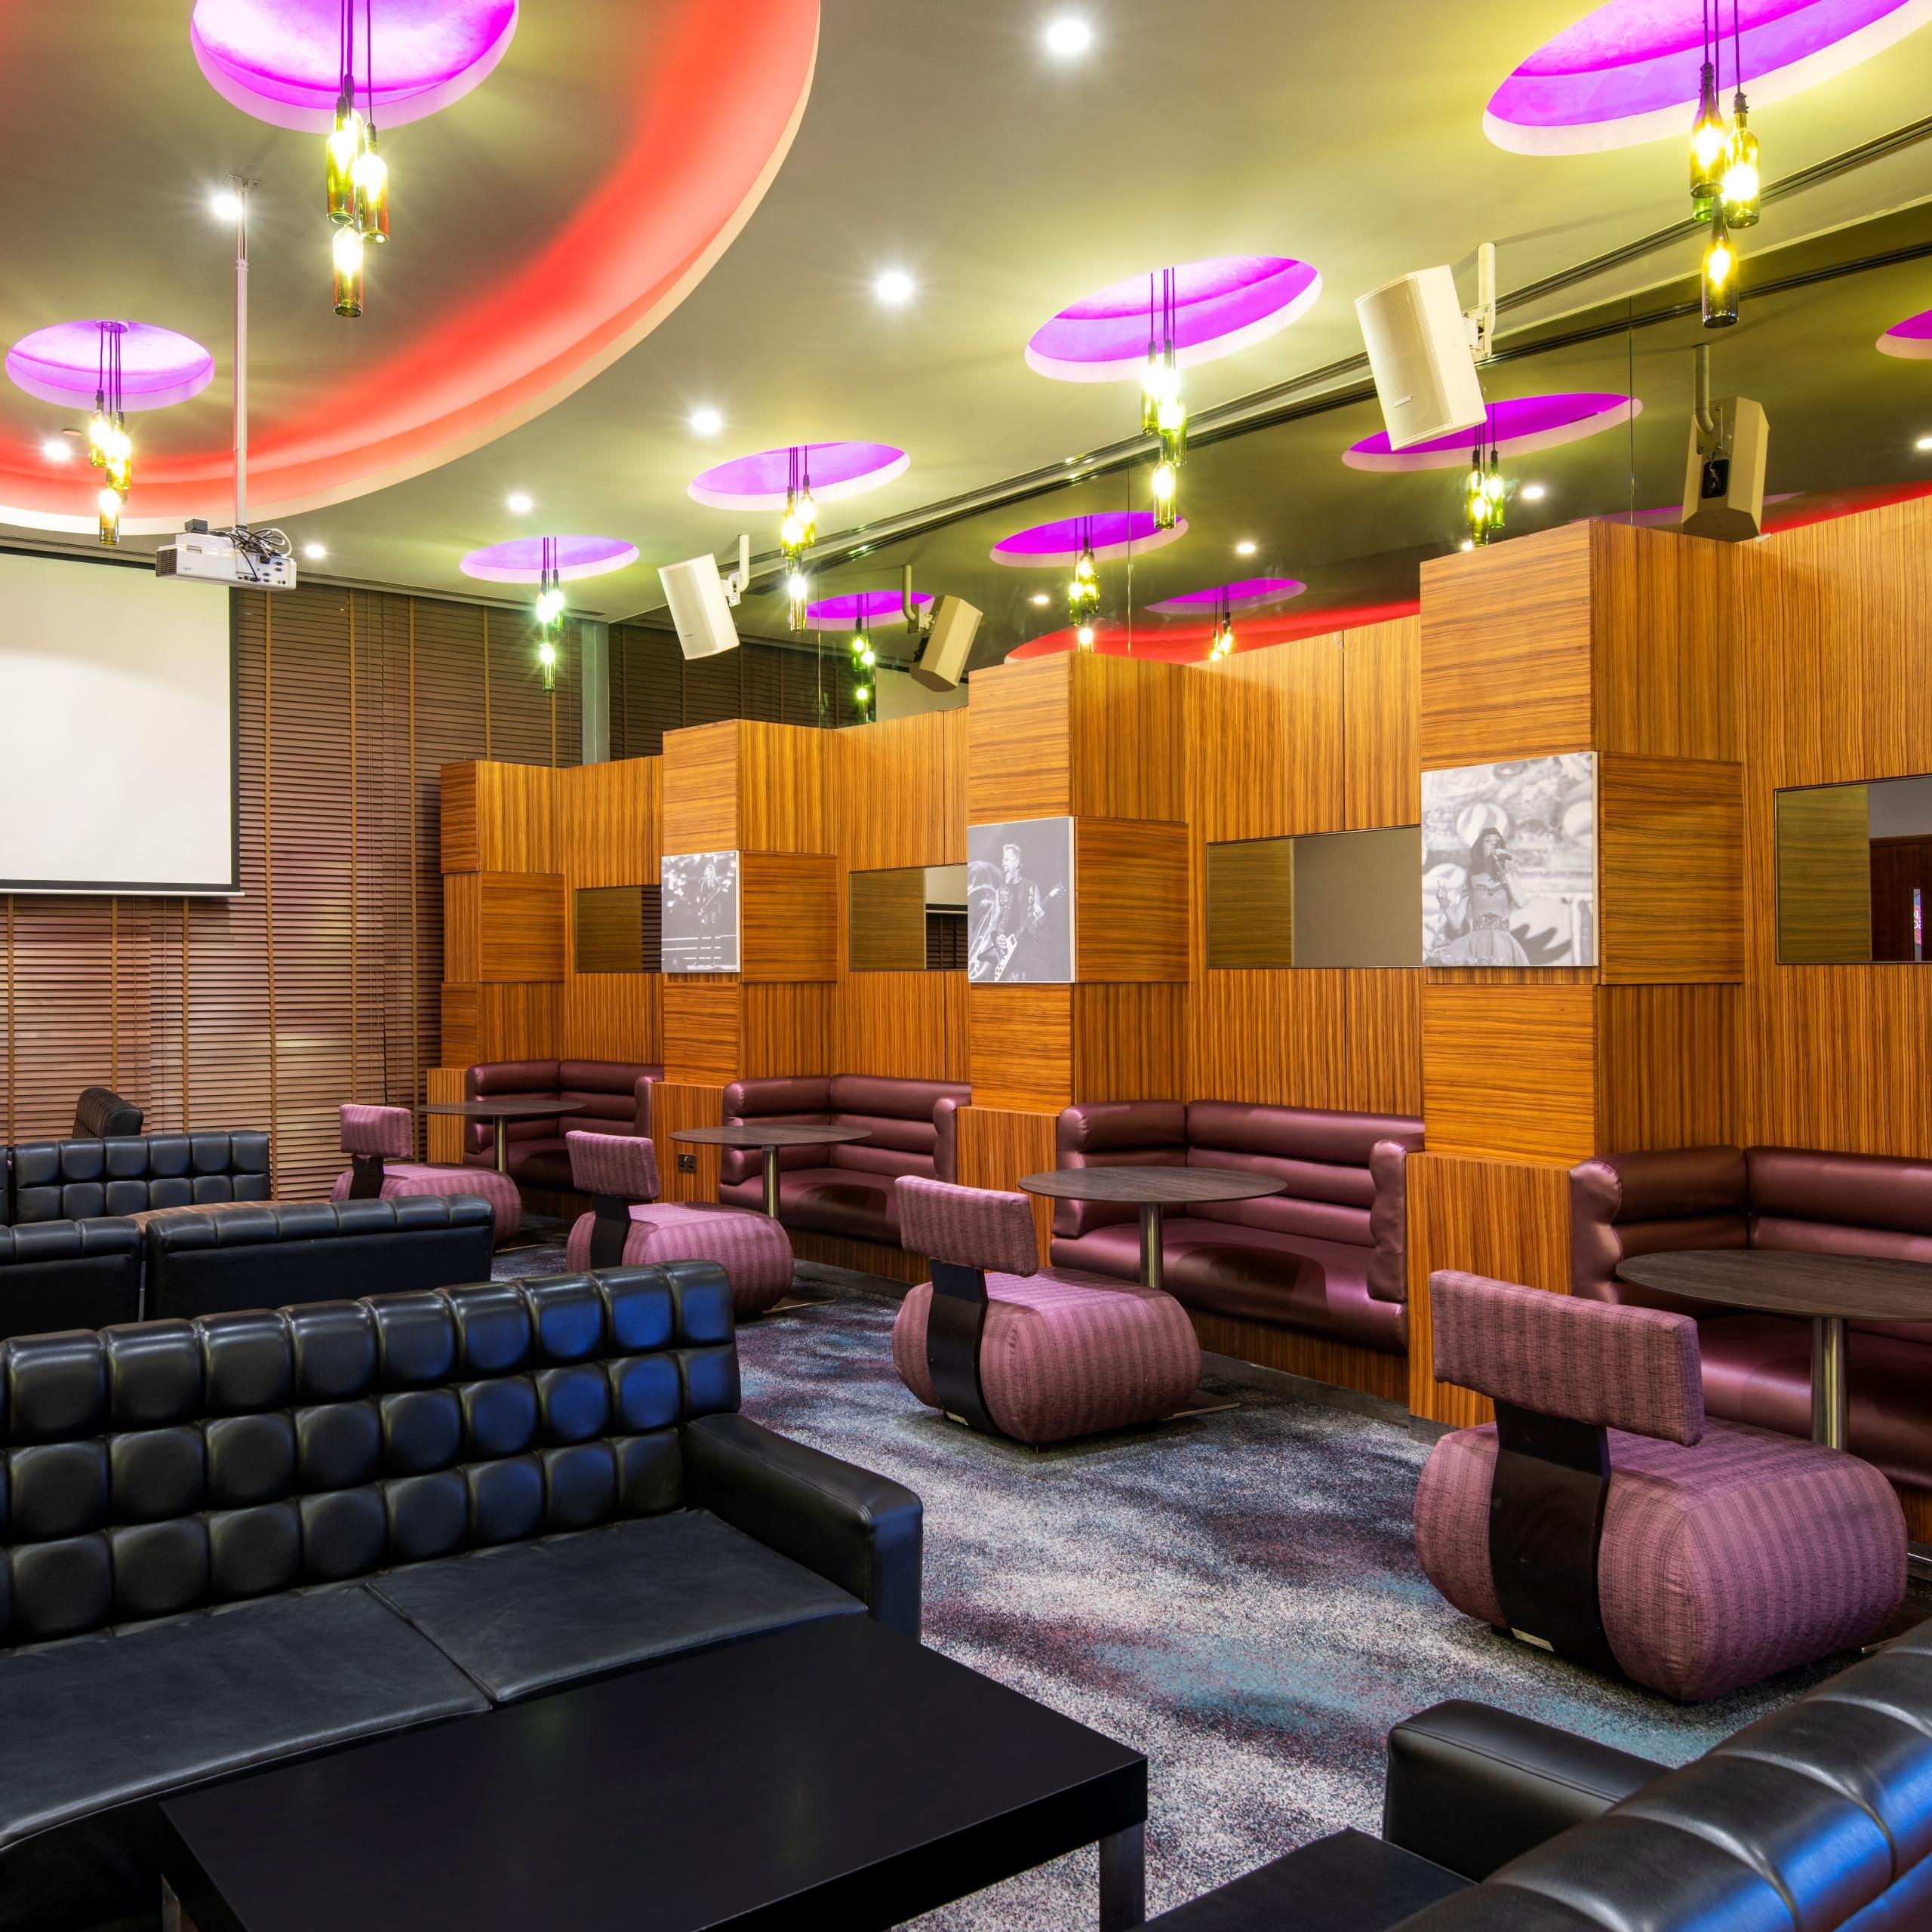 Lounge or dine, Misturado has seating areas indoor &amp; outdoor